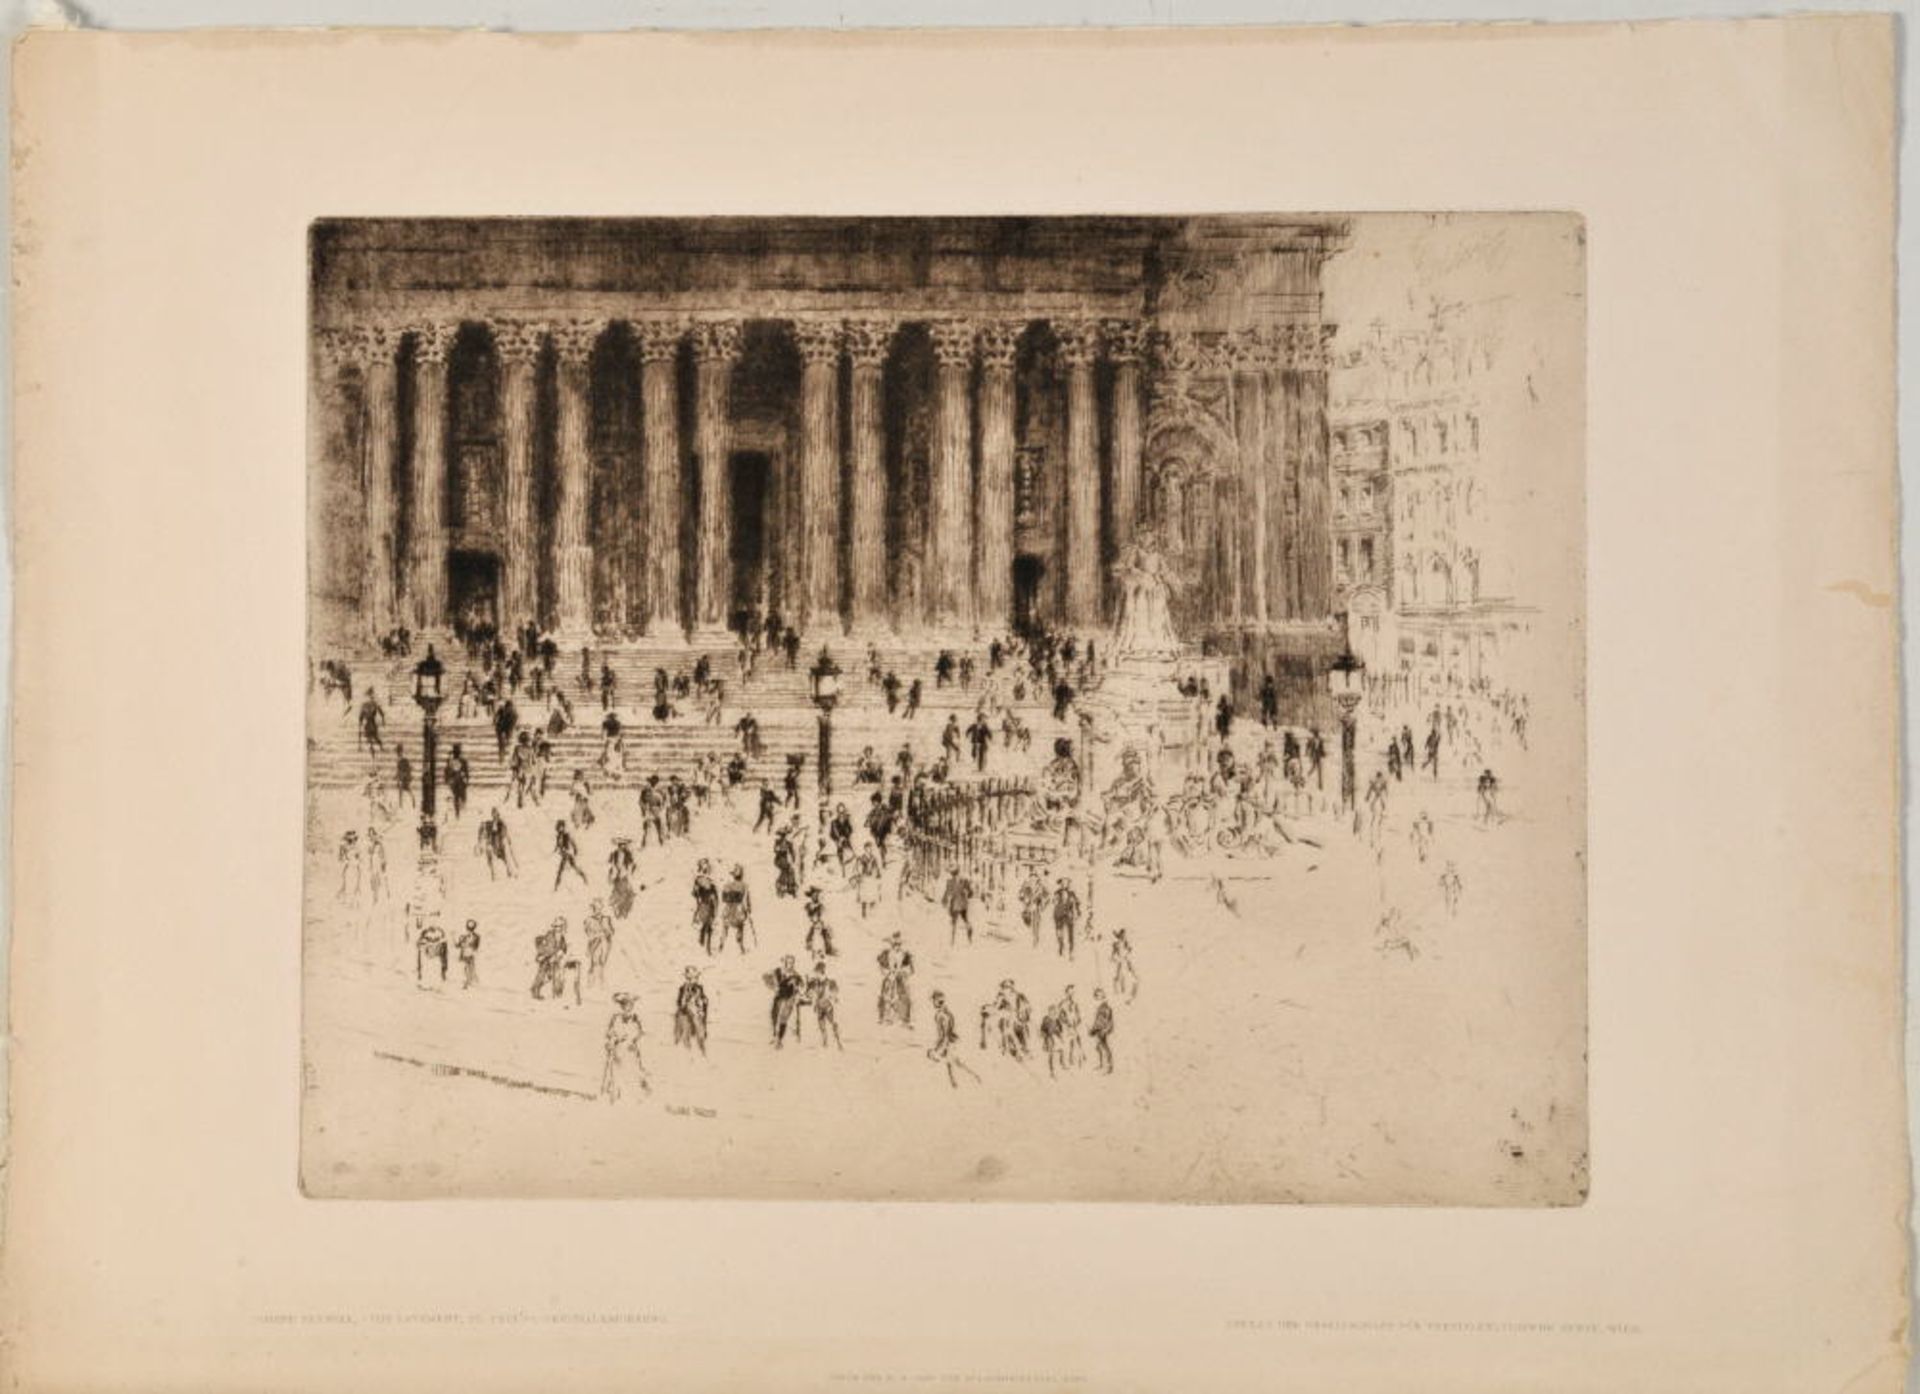 Pennell, Joseph, 1858 o. 1860 Philadelphia - 1926 New YorkRadierung, 21,5 x 28 cm, " The Pavement,